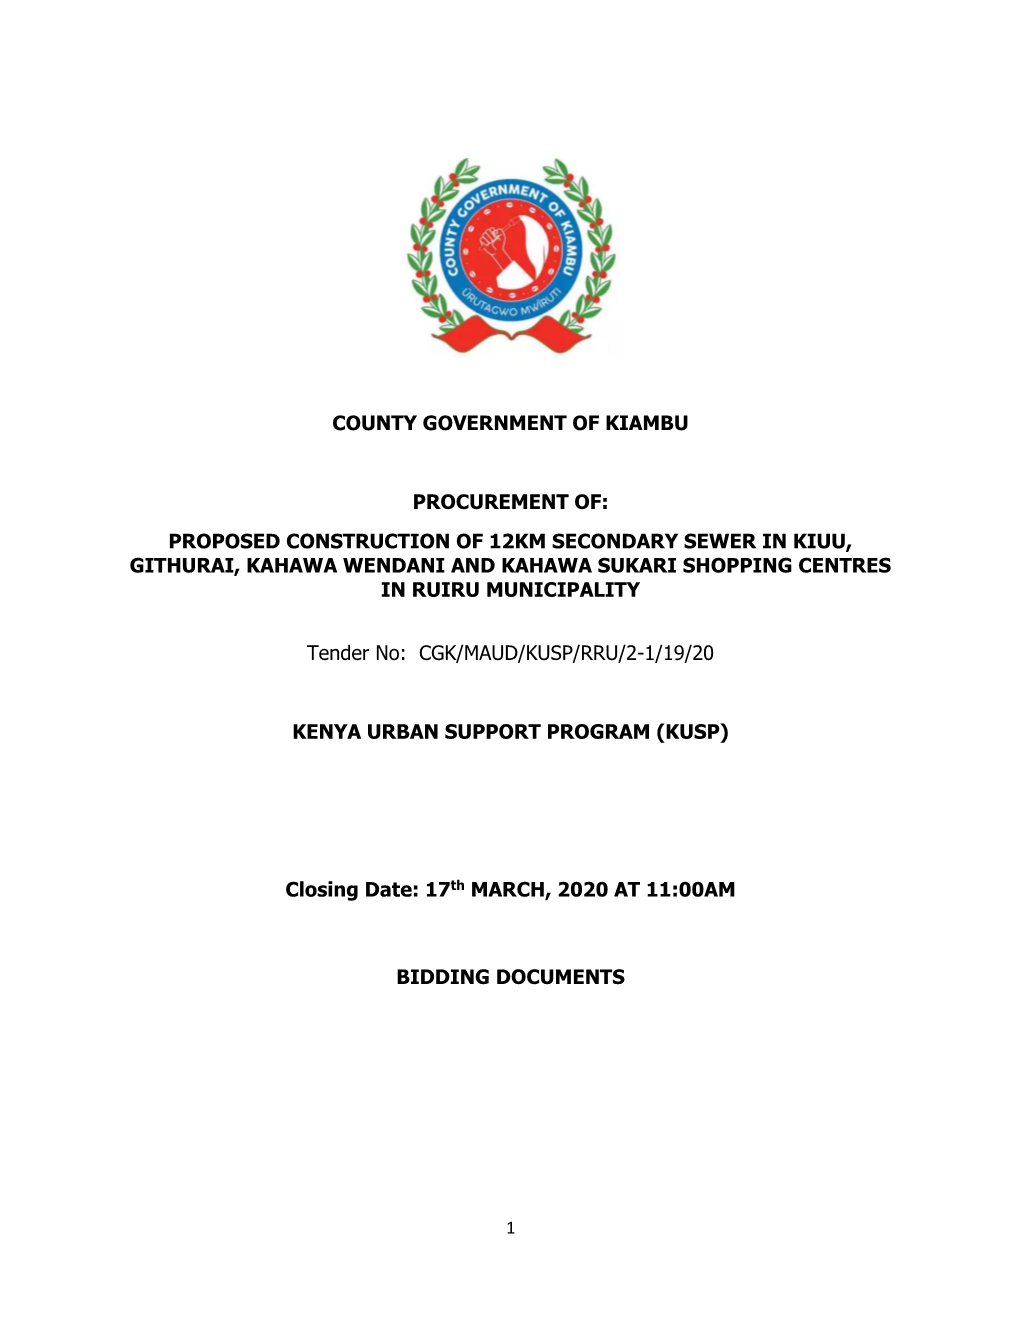 County Government of Kiambu Procurement Of: Proposed Construction of 12Km Secondary Sewer in Kiuu, Githurai, Kahawa Wendani